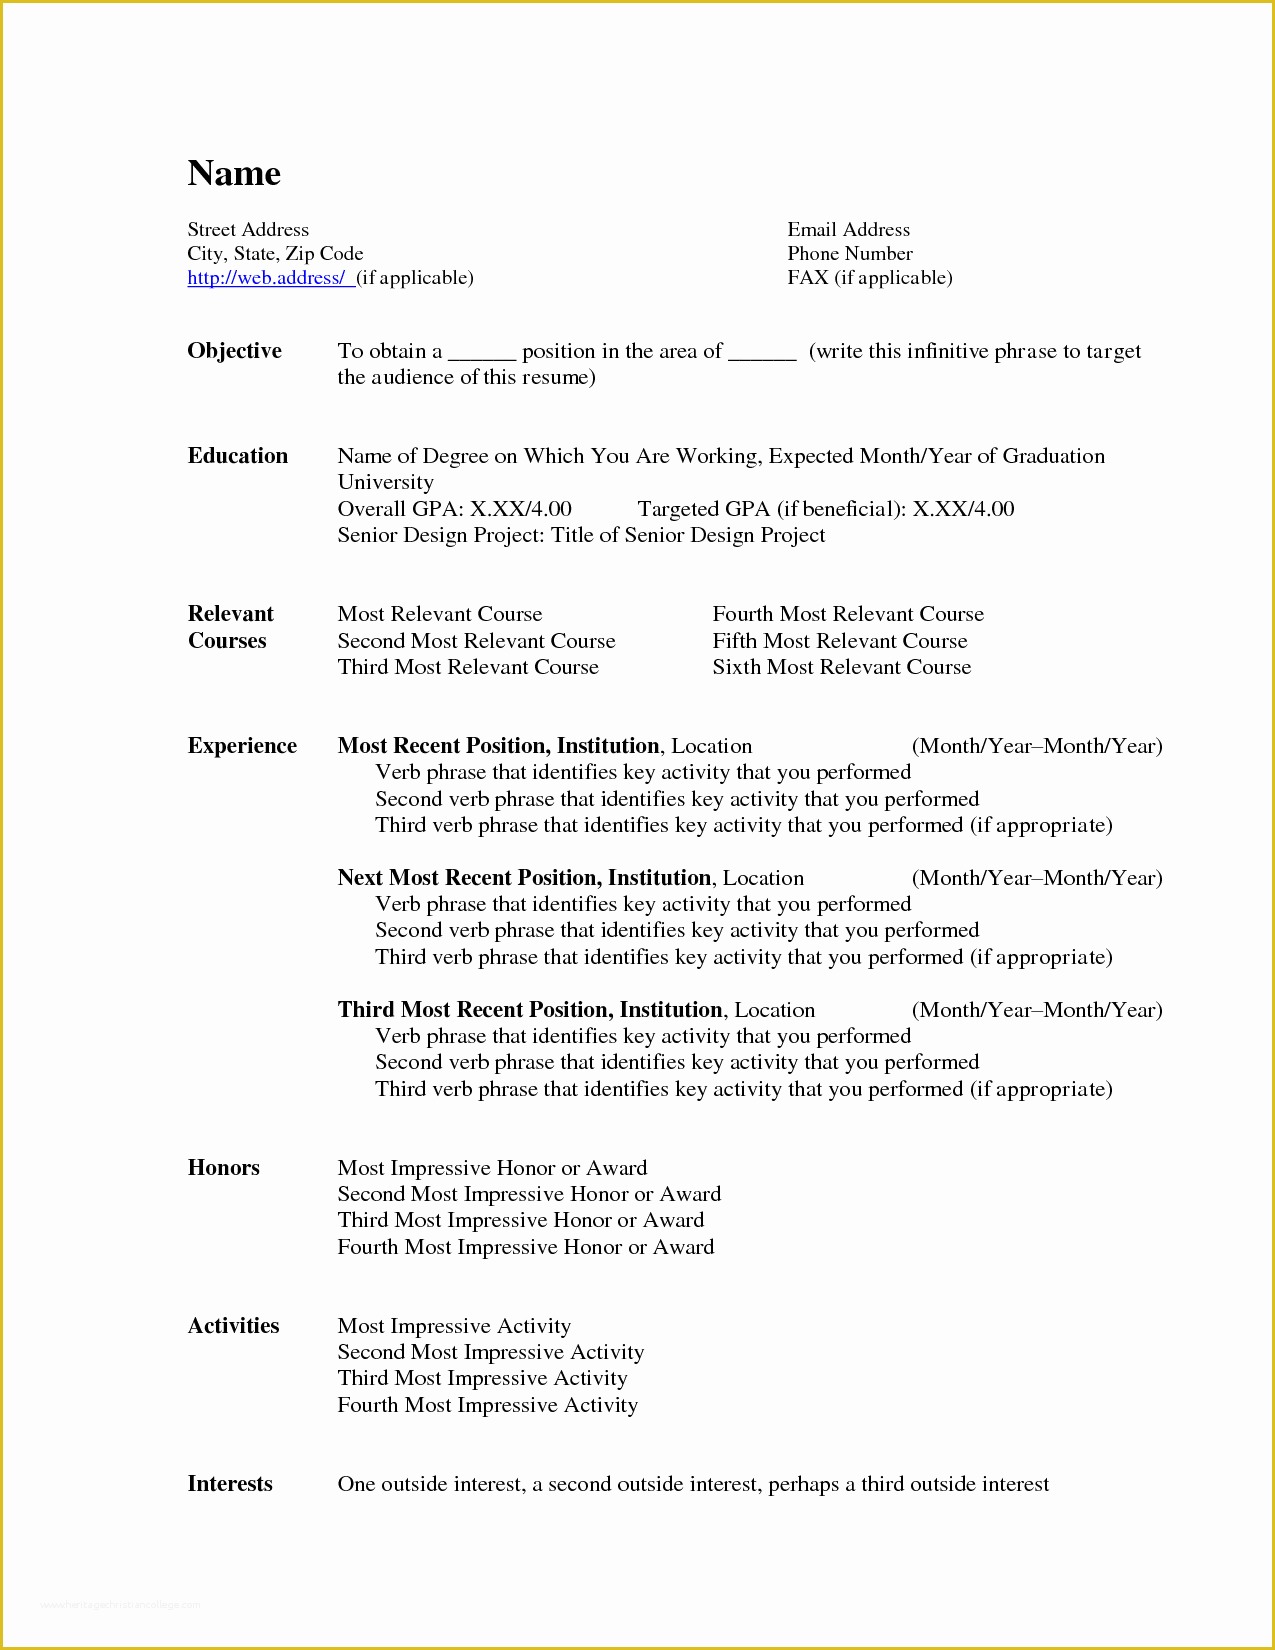 Resume Builder Template Free Microsoft Word Of Microsoft Word Resume Template Resume Builder Resume